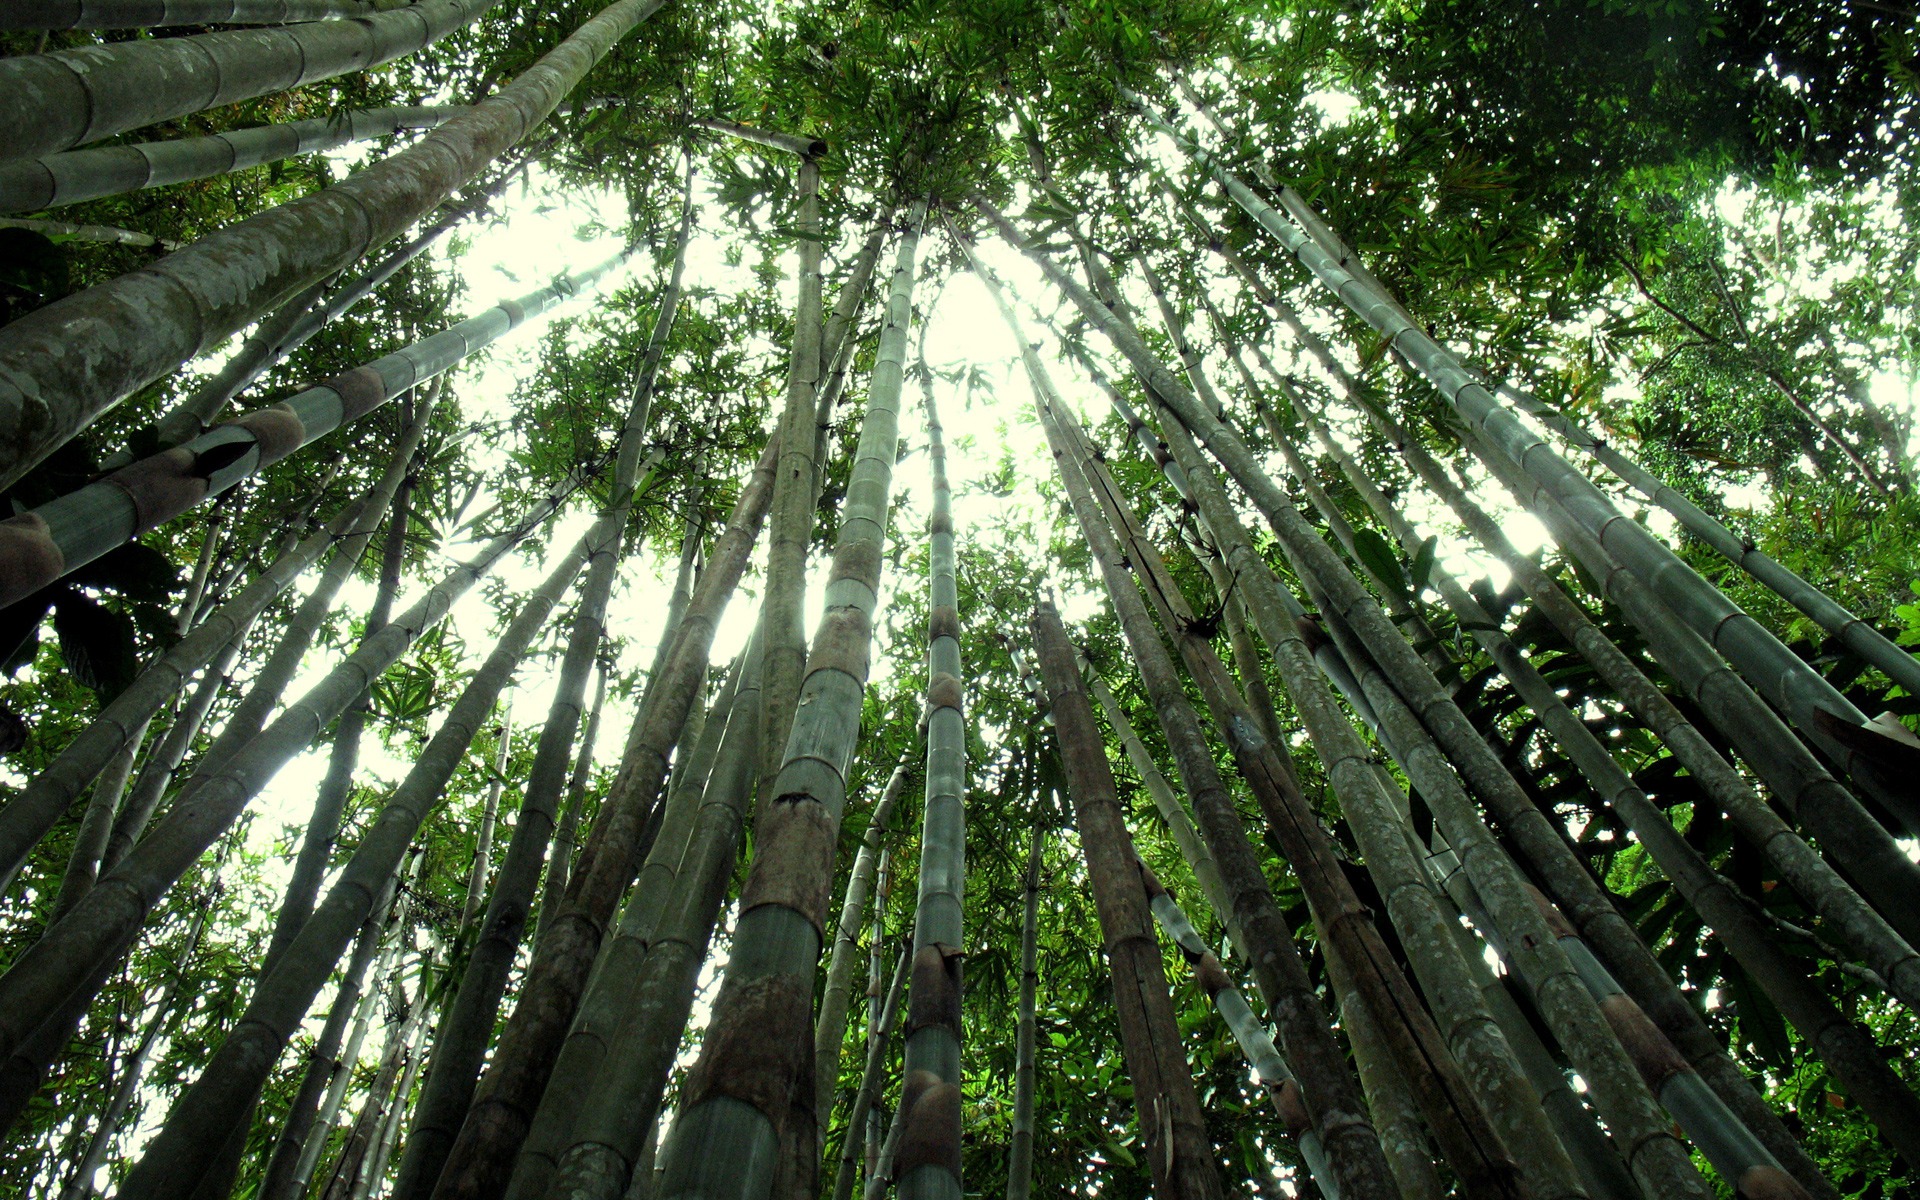 Bamboo Forest - HD Wallpaper 